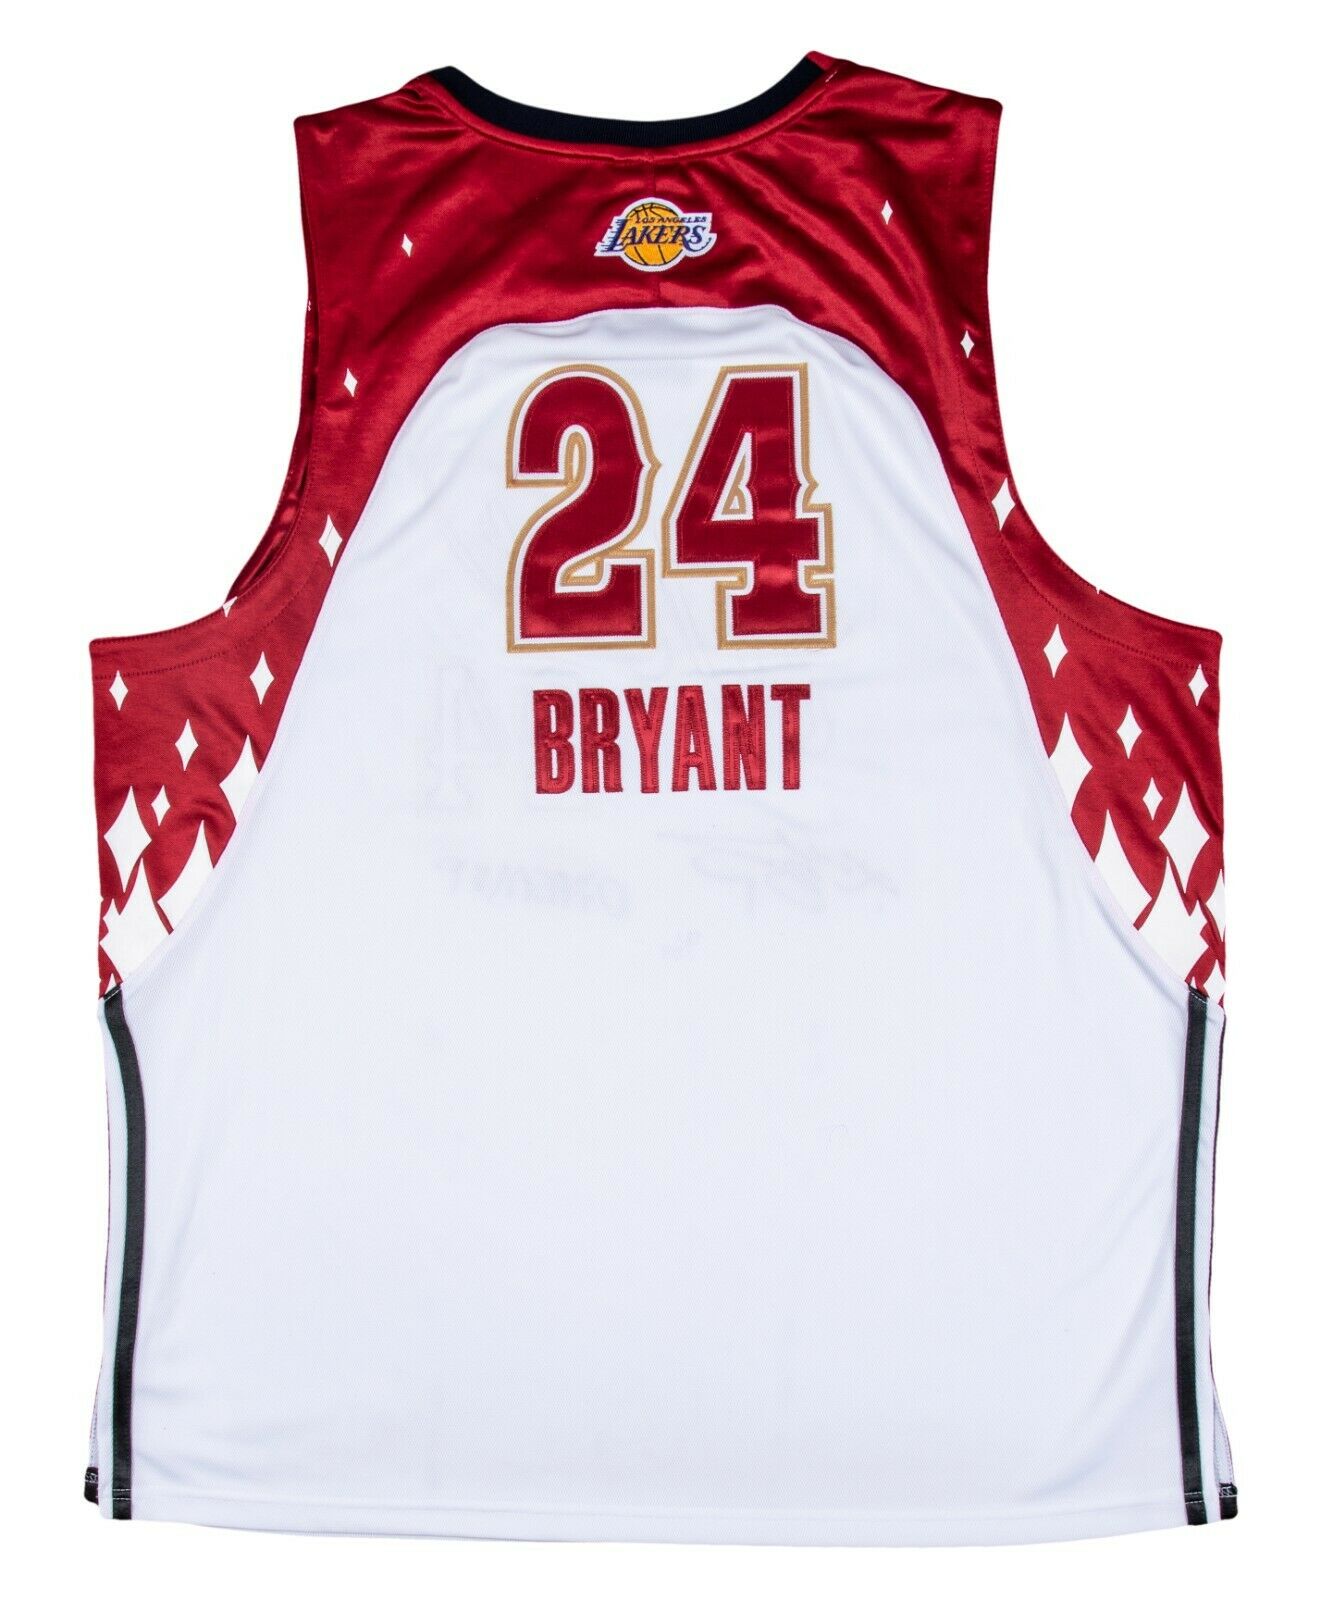 Kobe Bryant All Star Jersey